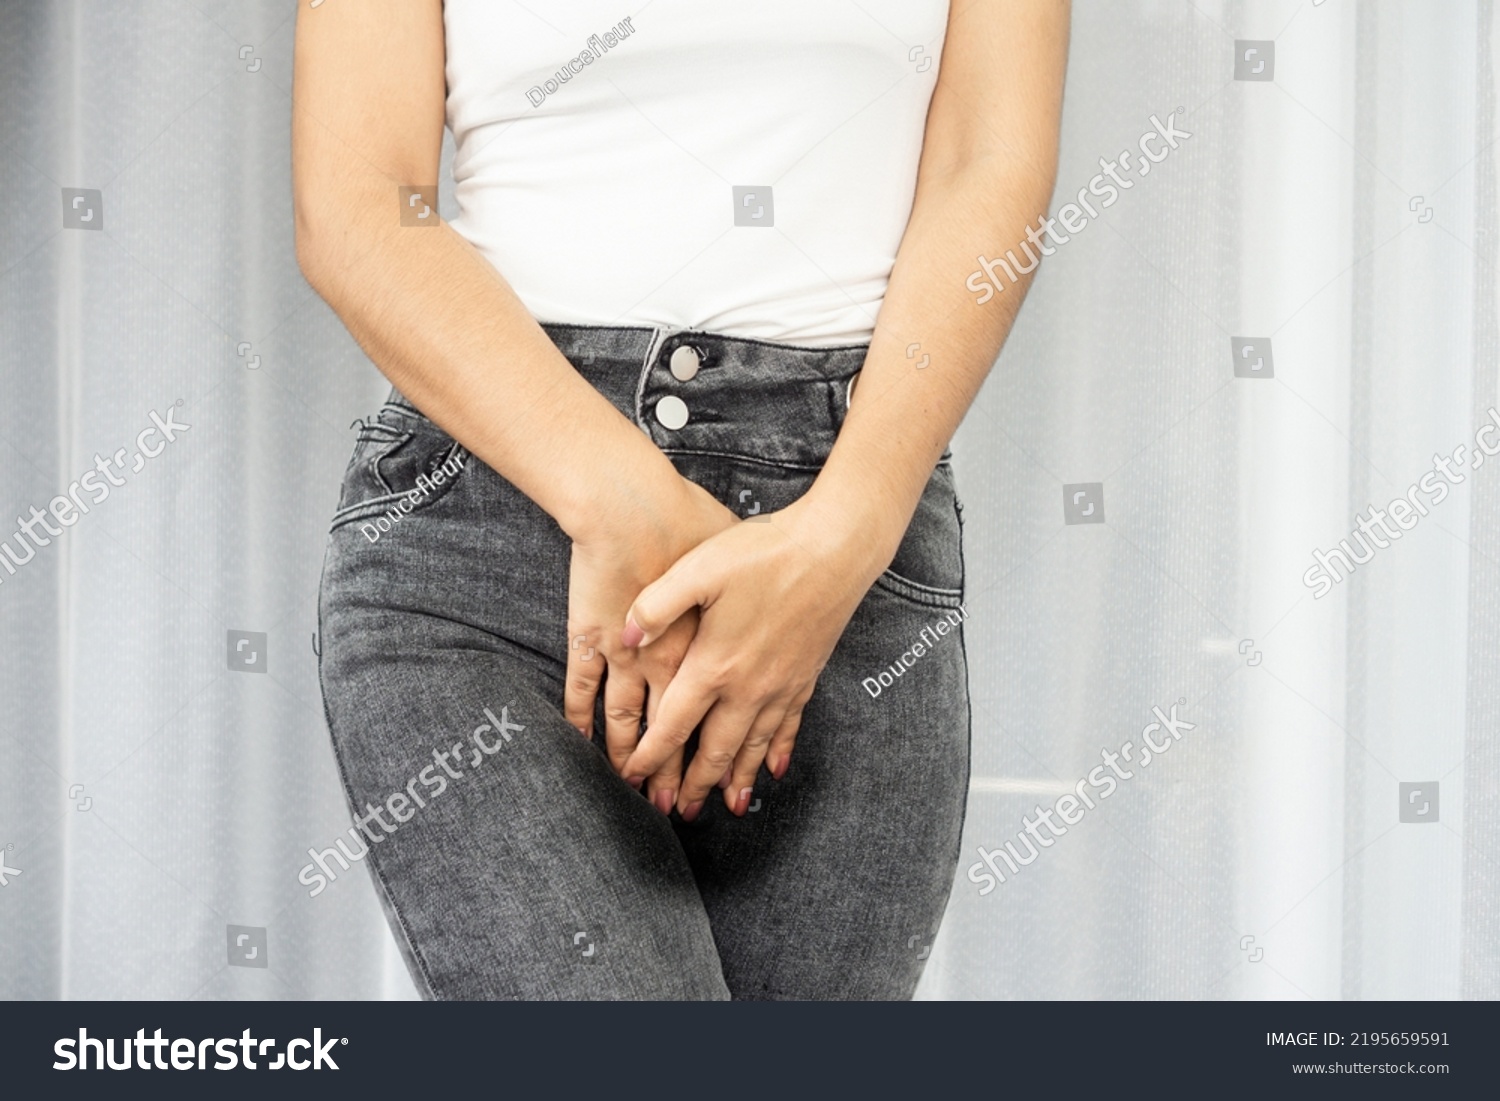 cheryl bunns add photo girl pees her shorts